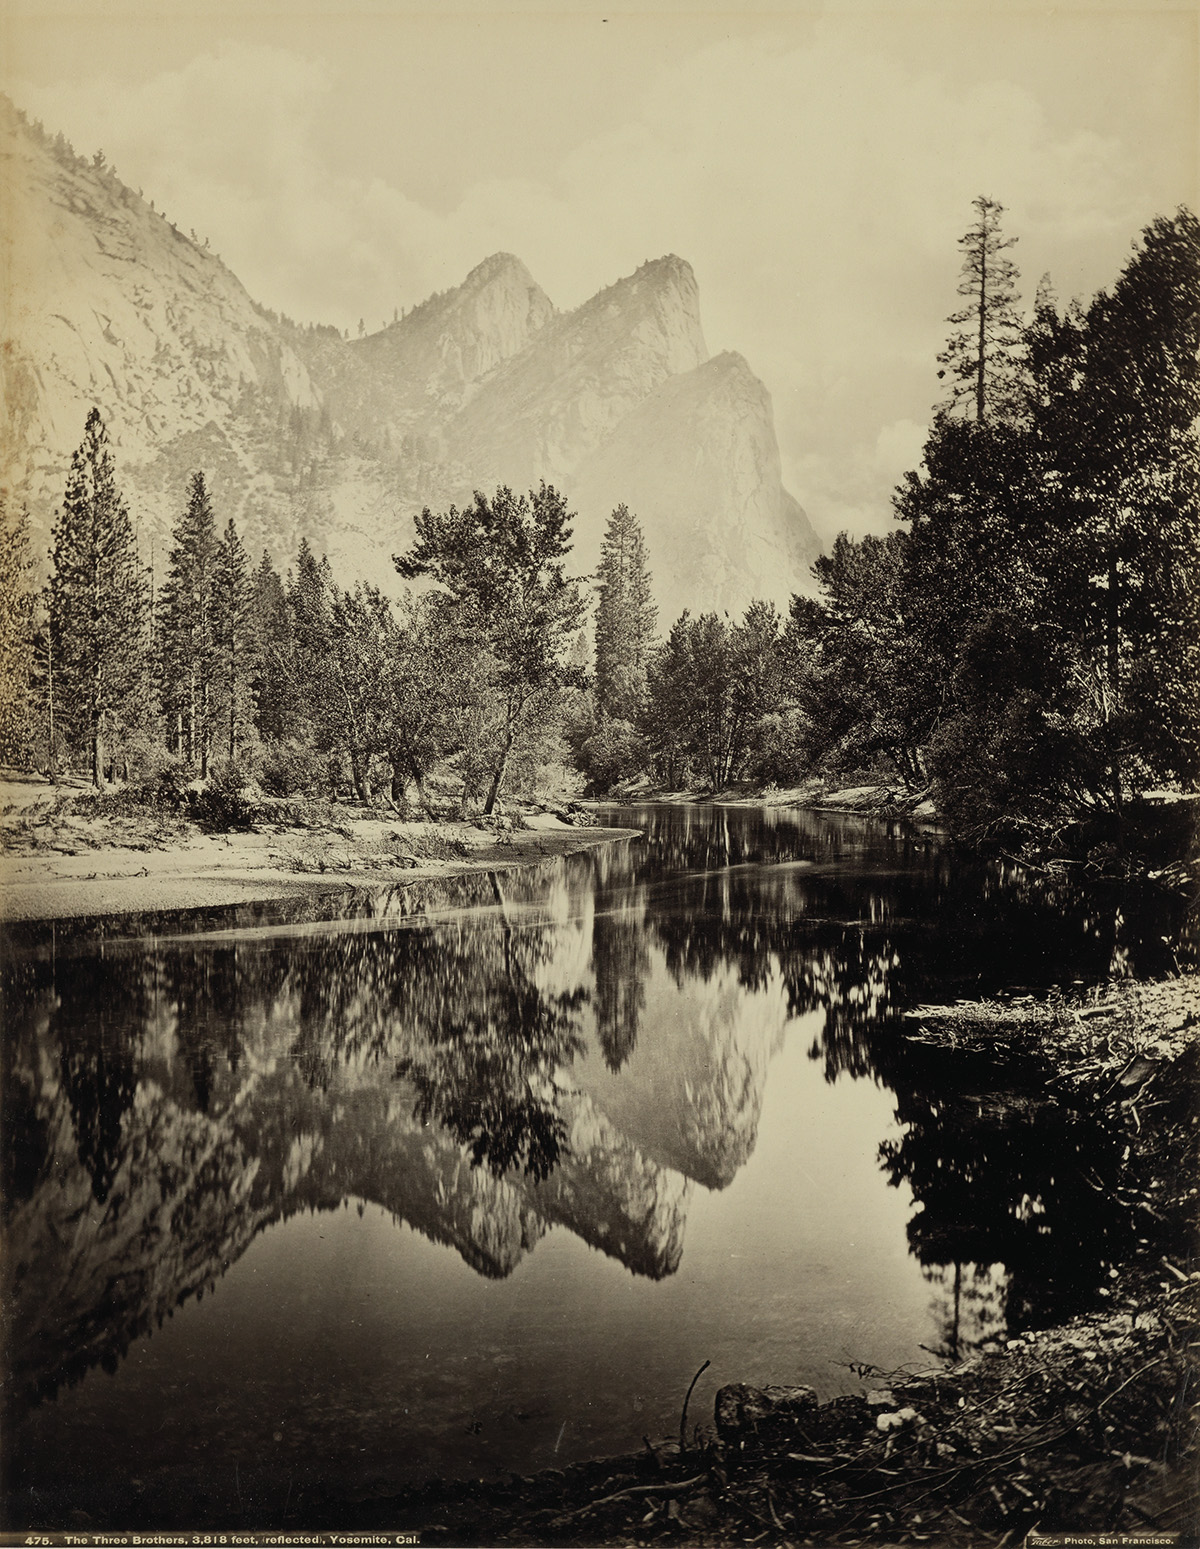 CARLETON E. WATKINS (1829-1916)/ISAIAH TABER (1830-1912) The Three Brothers, 3,818 feet, reflected, Yosemite, California.